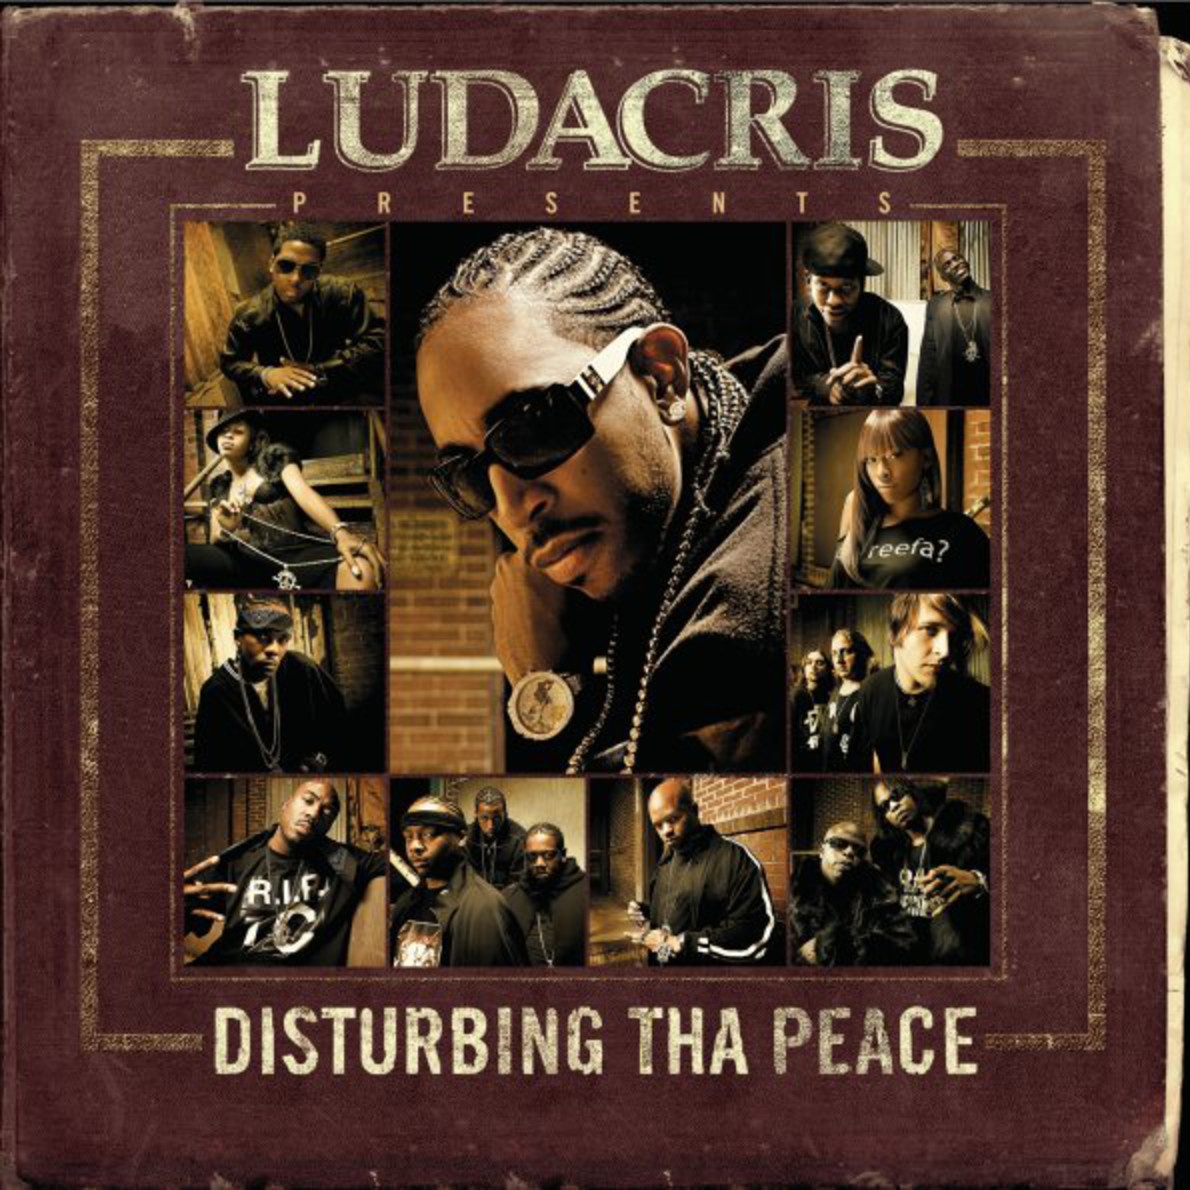 Skit (Ludacris and Disturbing Tha Peace/Ludacris Presents...Disturbing Tha Peace) - Album Version (Explicit)